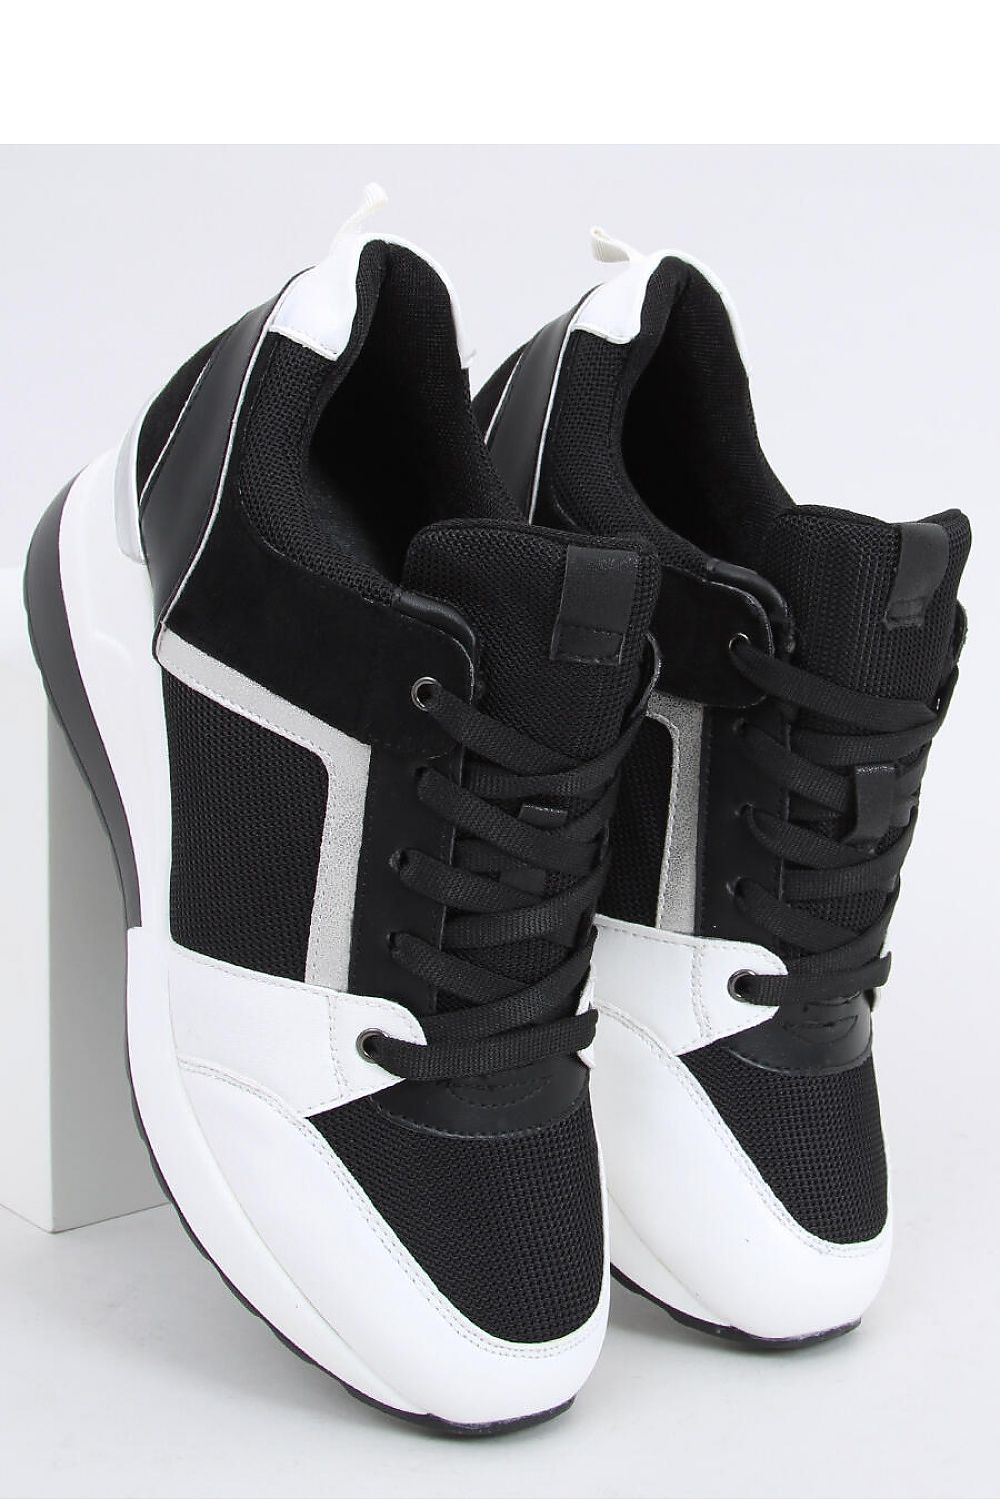 TEEK - Black White Wedge Sneakers SHOES TEEK MH 5.5  